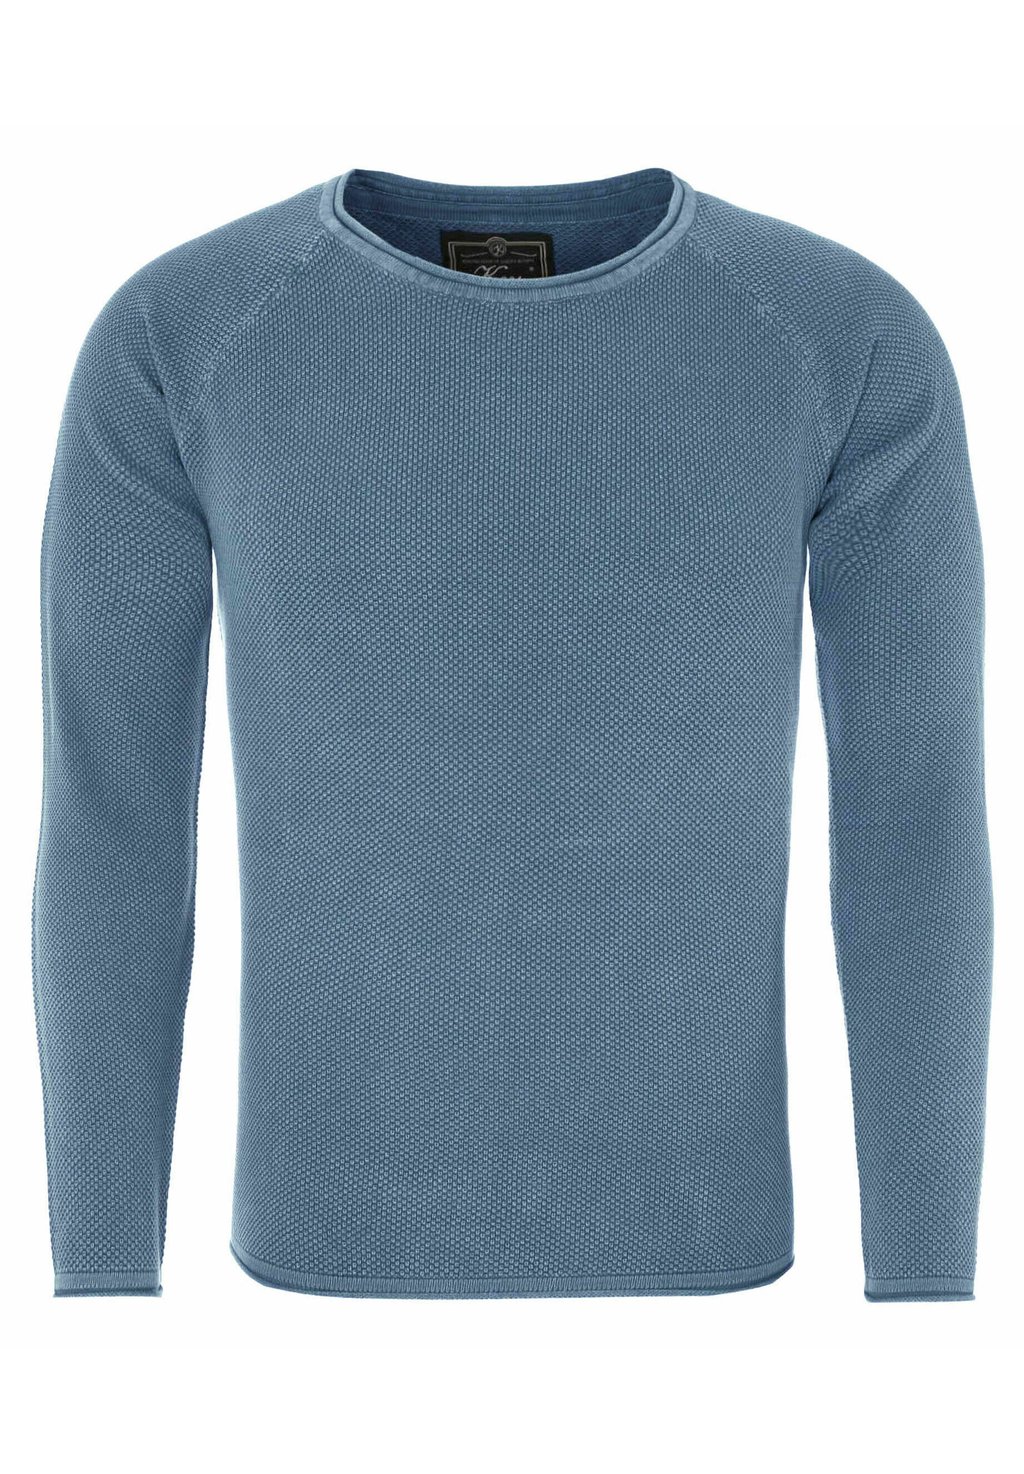 Вязаный свитер MST THOMAS ROUND NECK Key Largo, цвет blue (970) цена и фото